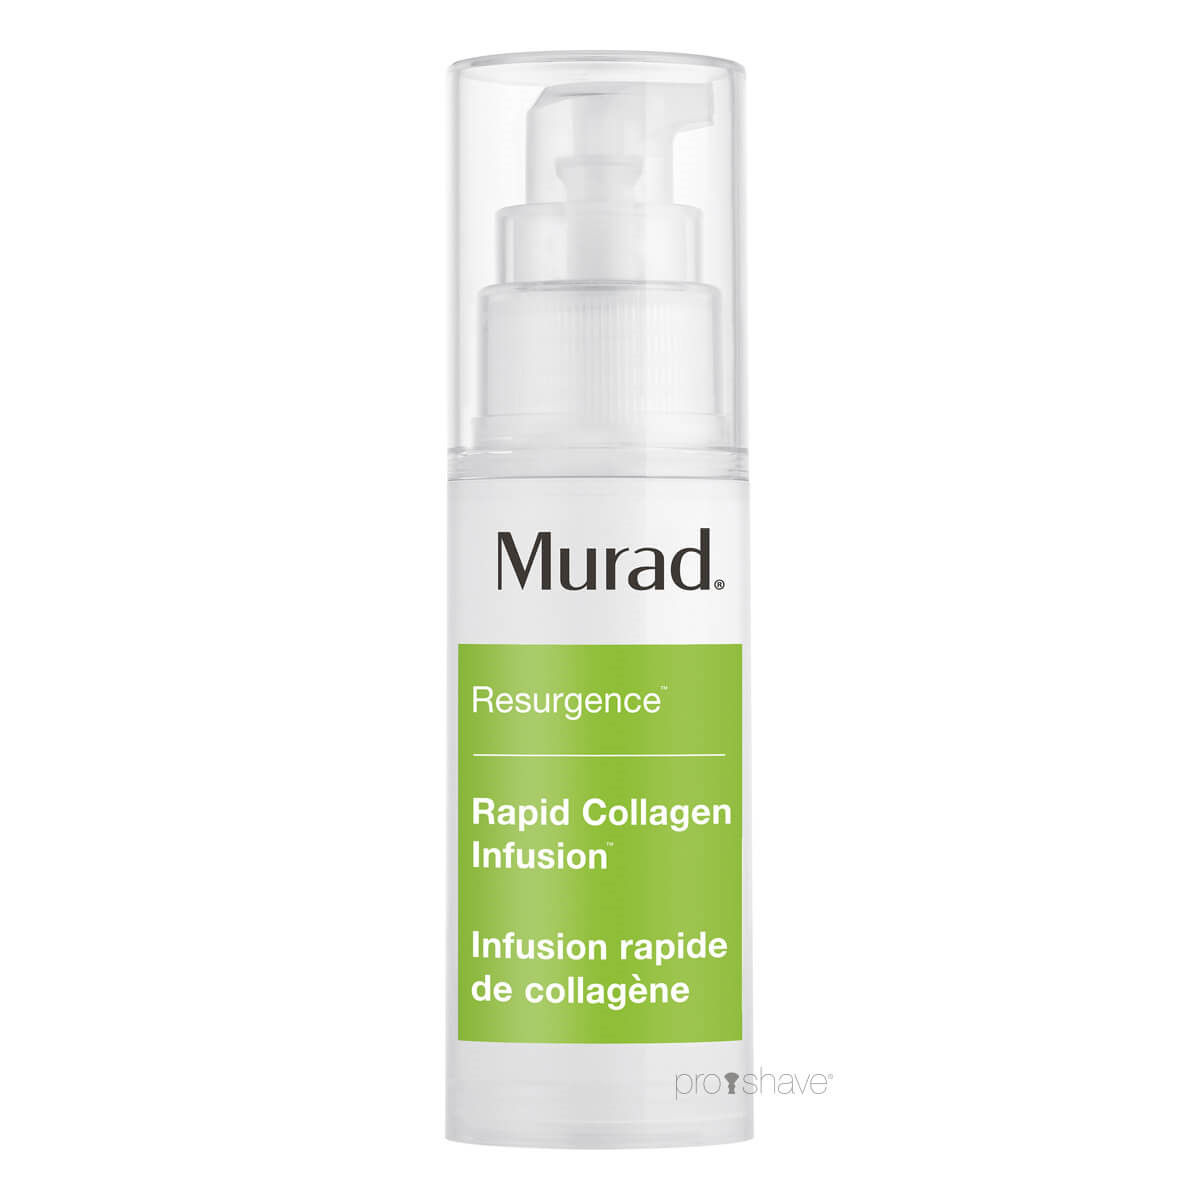 Se Murad Resurgence Rapid Collagen Infusion, Resurgence, 30 ml. hos Proshave